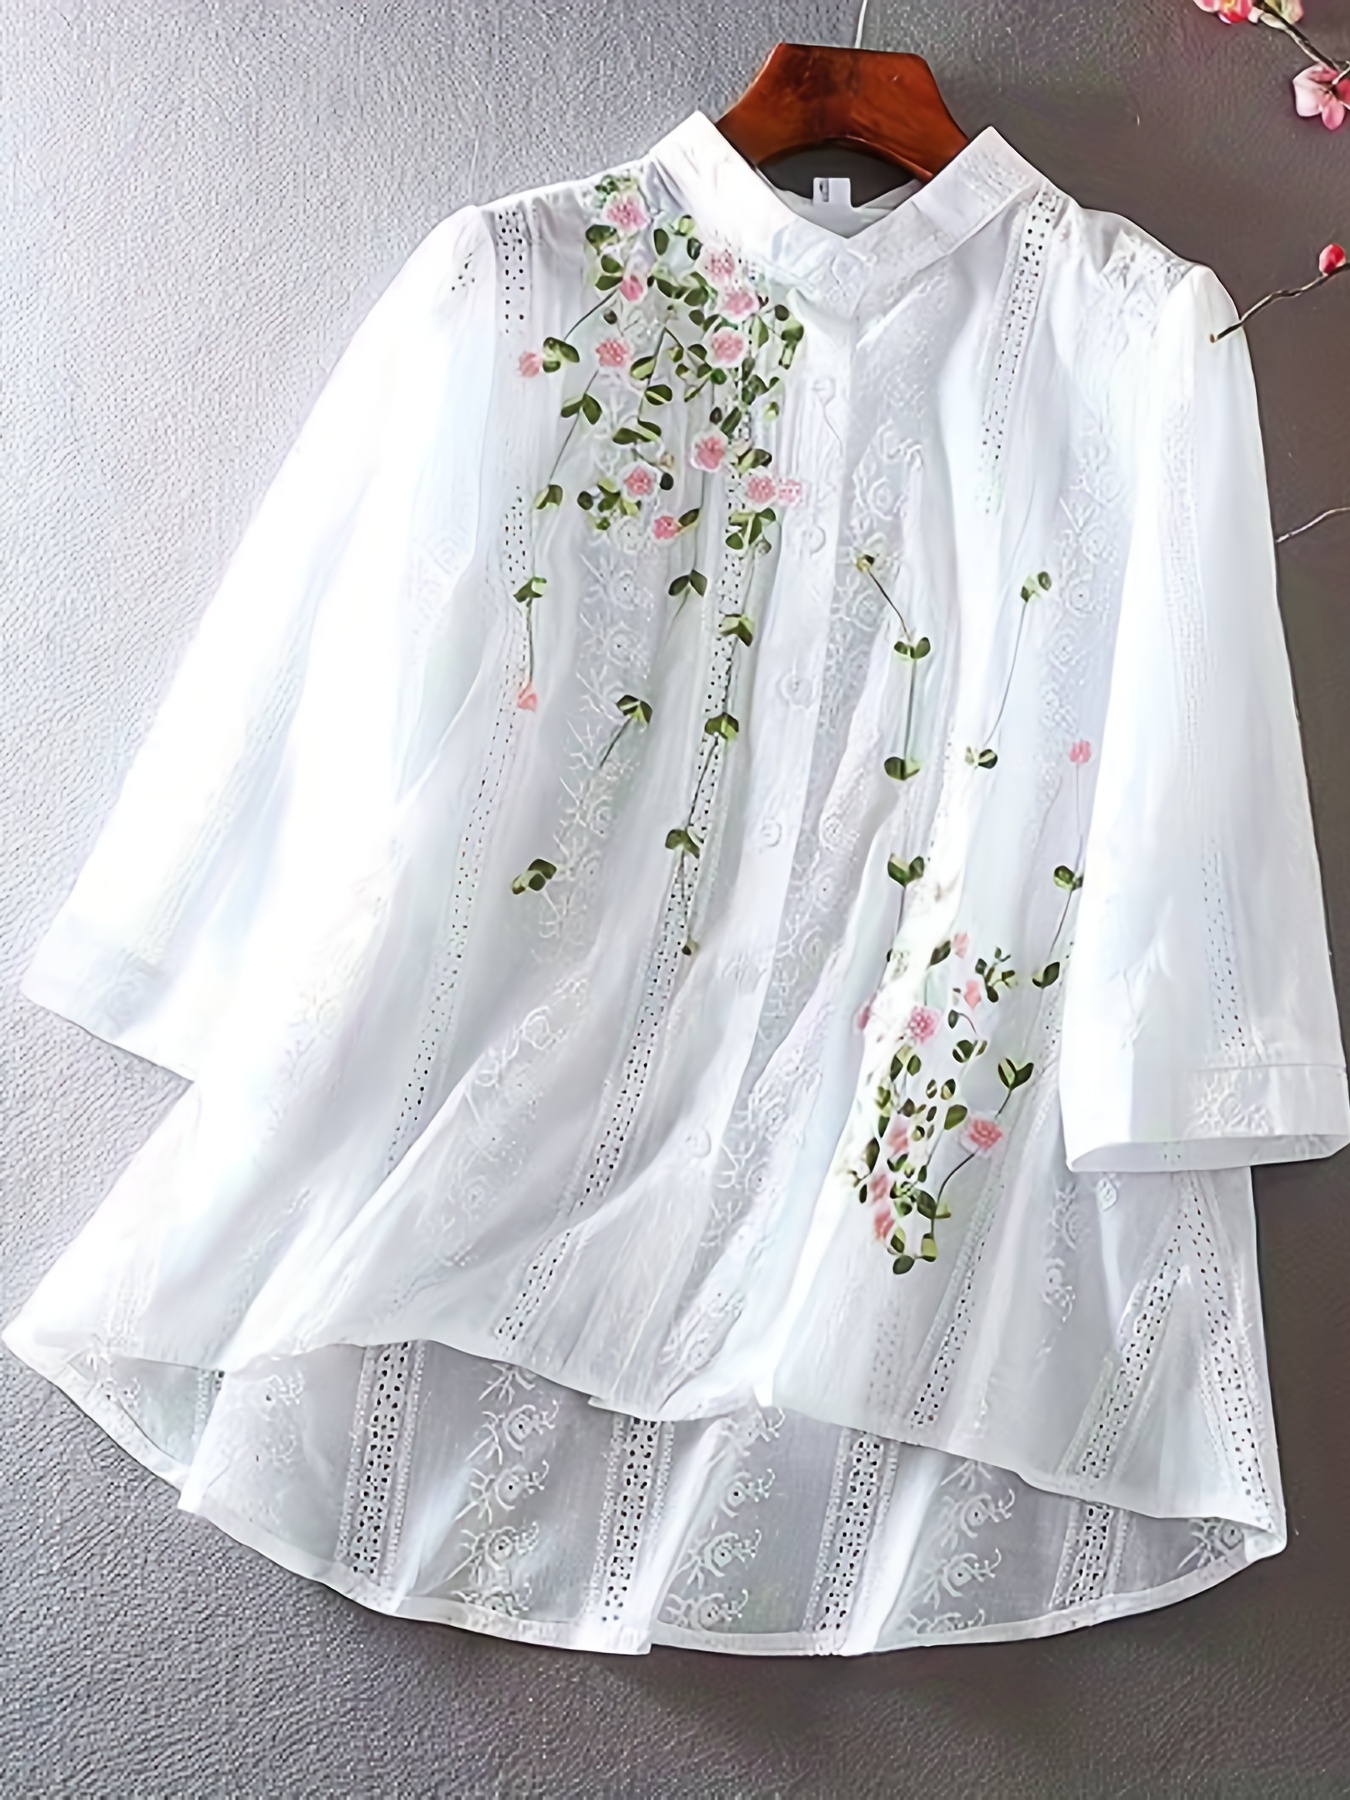 eyelet floral blouse elegant button front blouse for spring summer womens clothing details 7